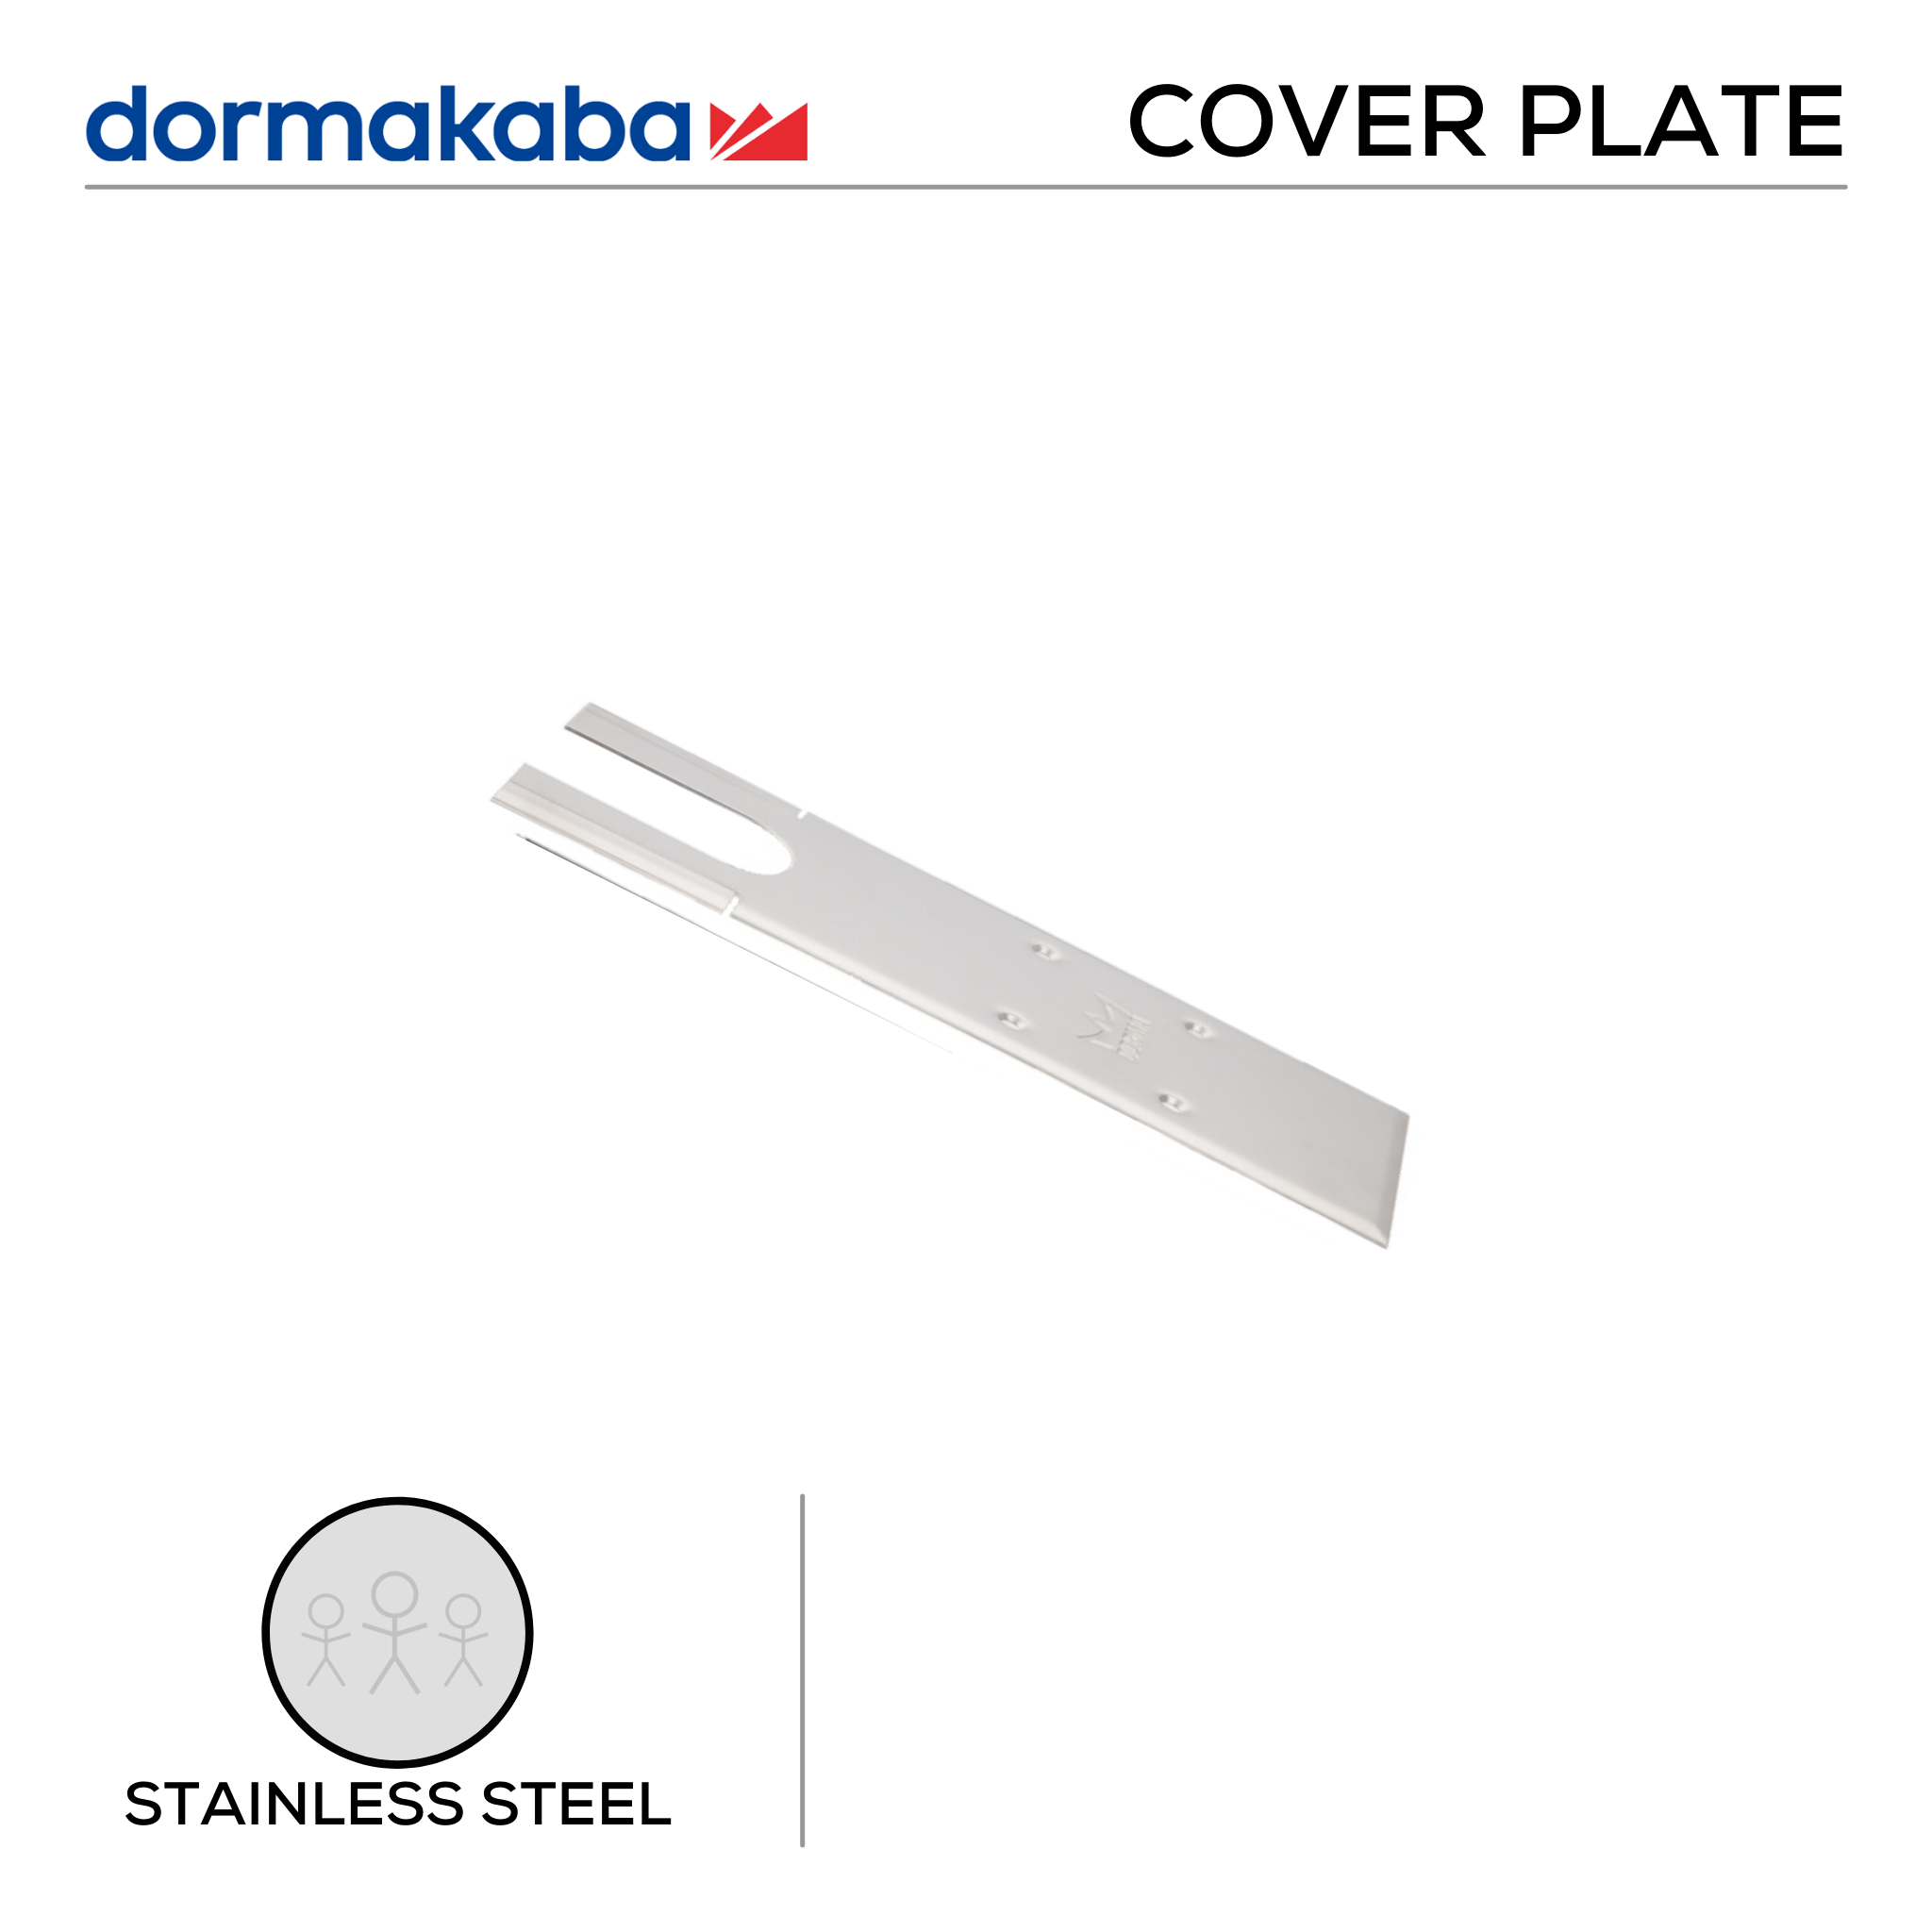 BTS 75V Cover Plate 7510, Cover Plate, Stainless Steel, DORMAKABA